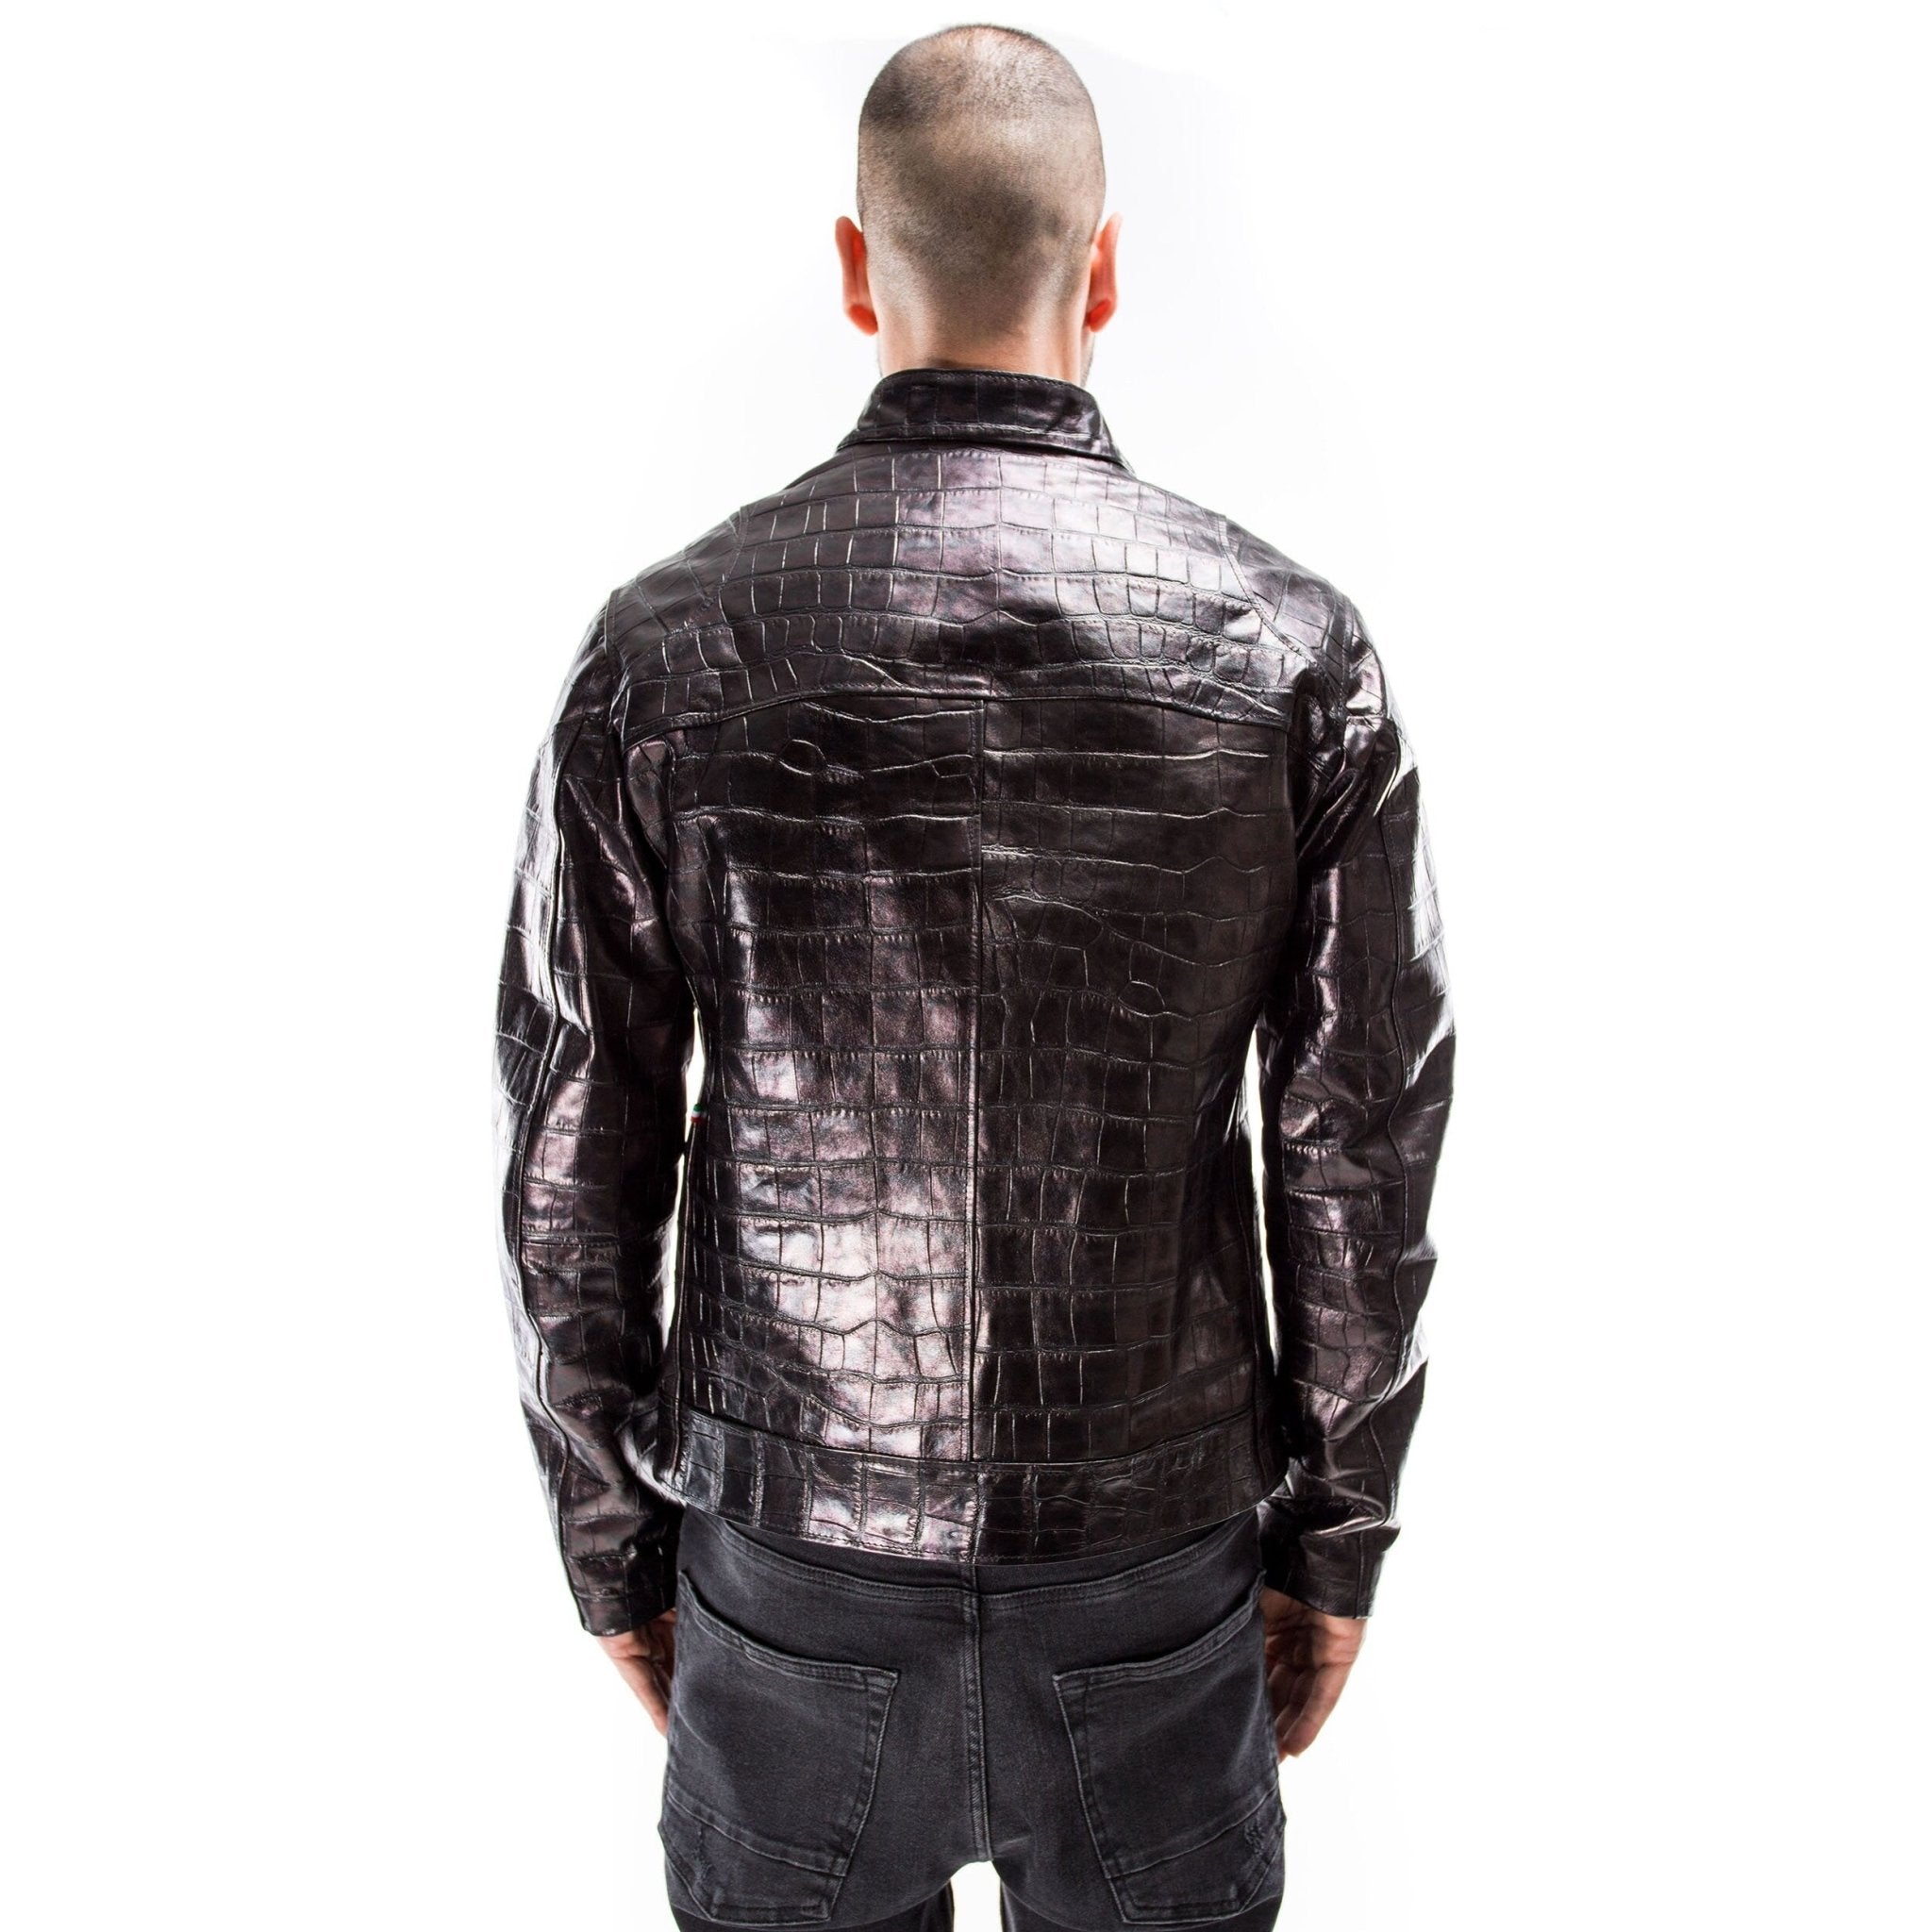 ASOS DESIGN trucker jacket in black croc leather look - part of a set | ASOS